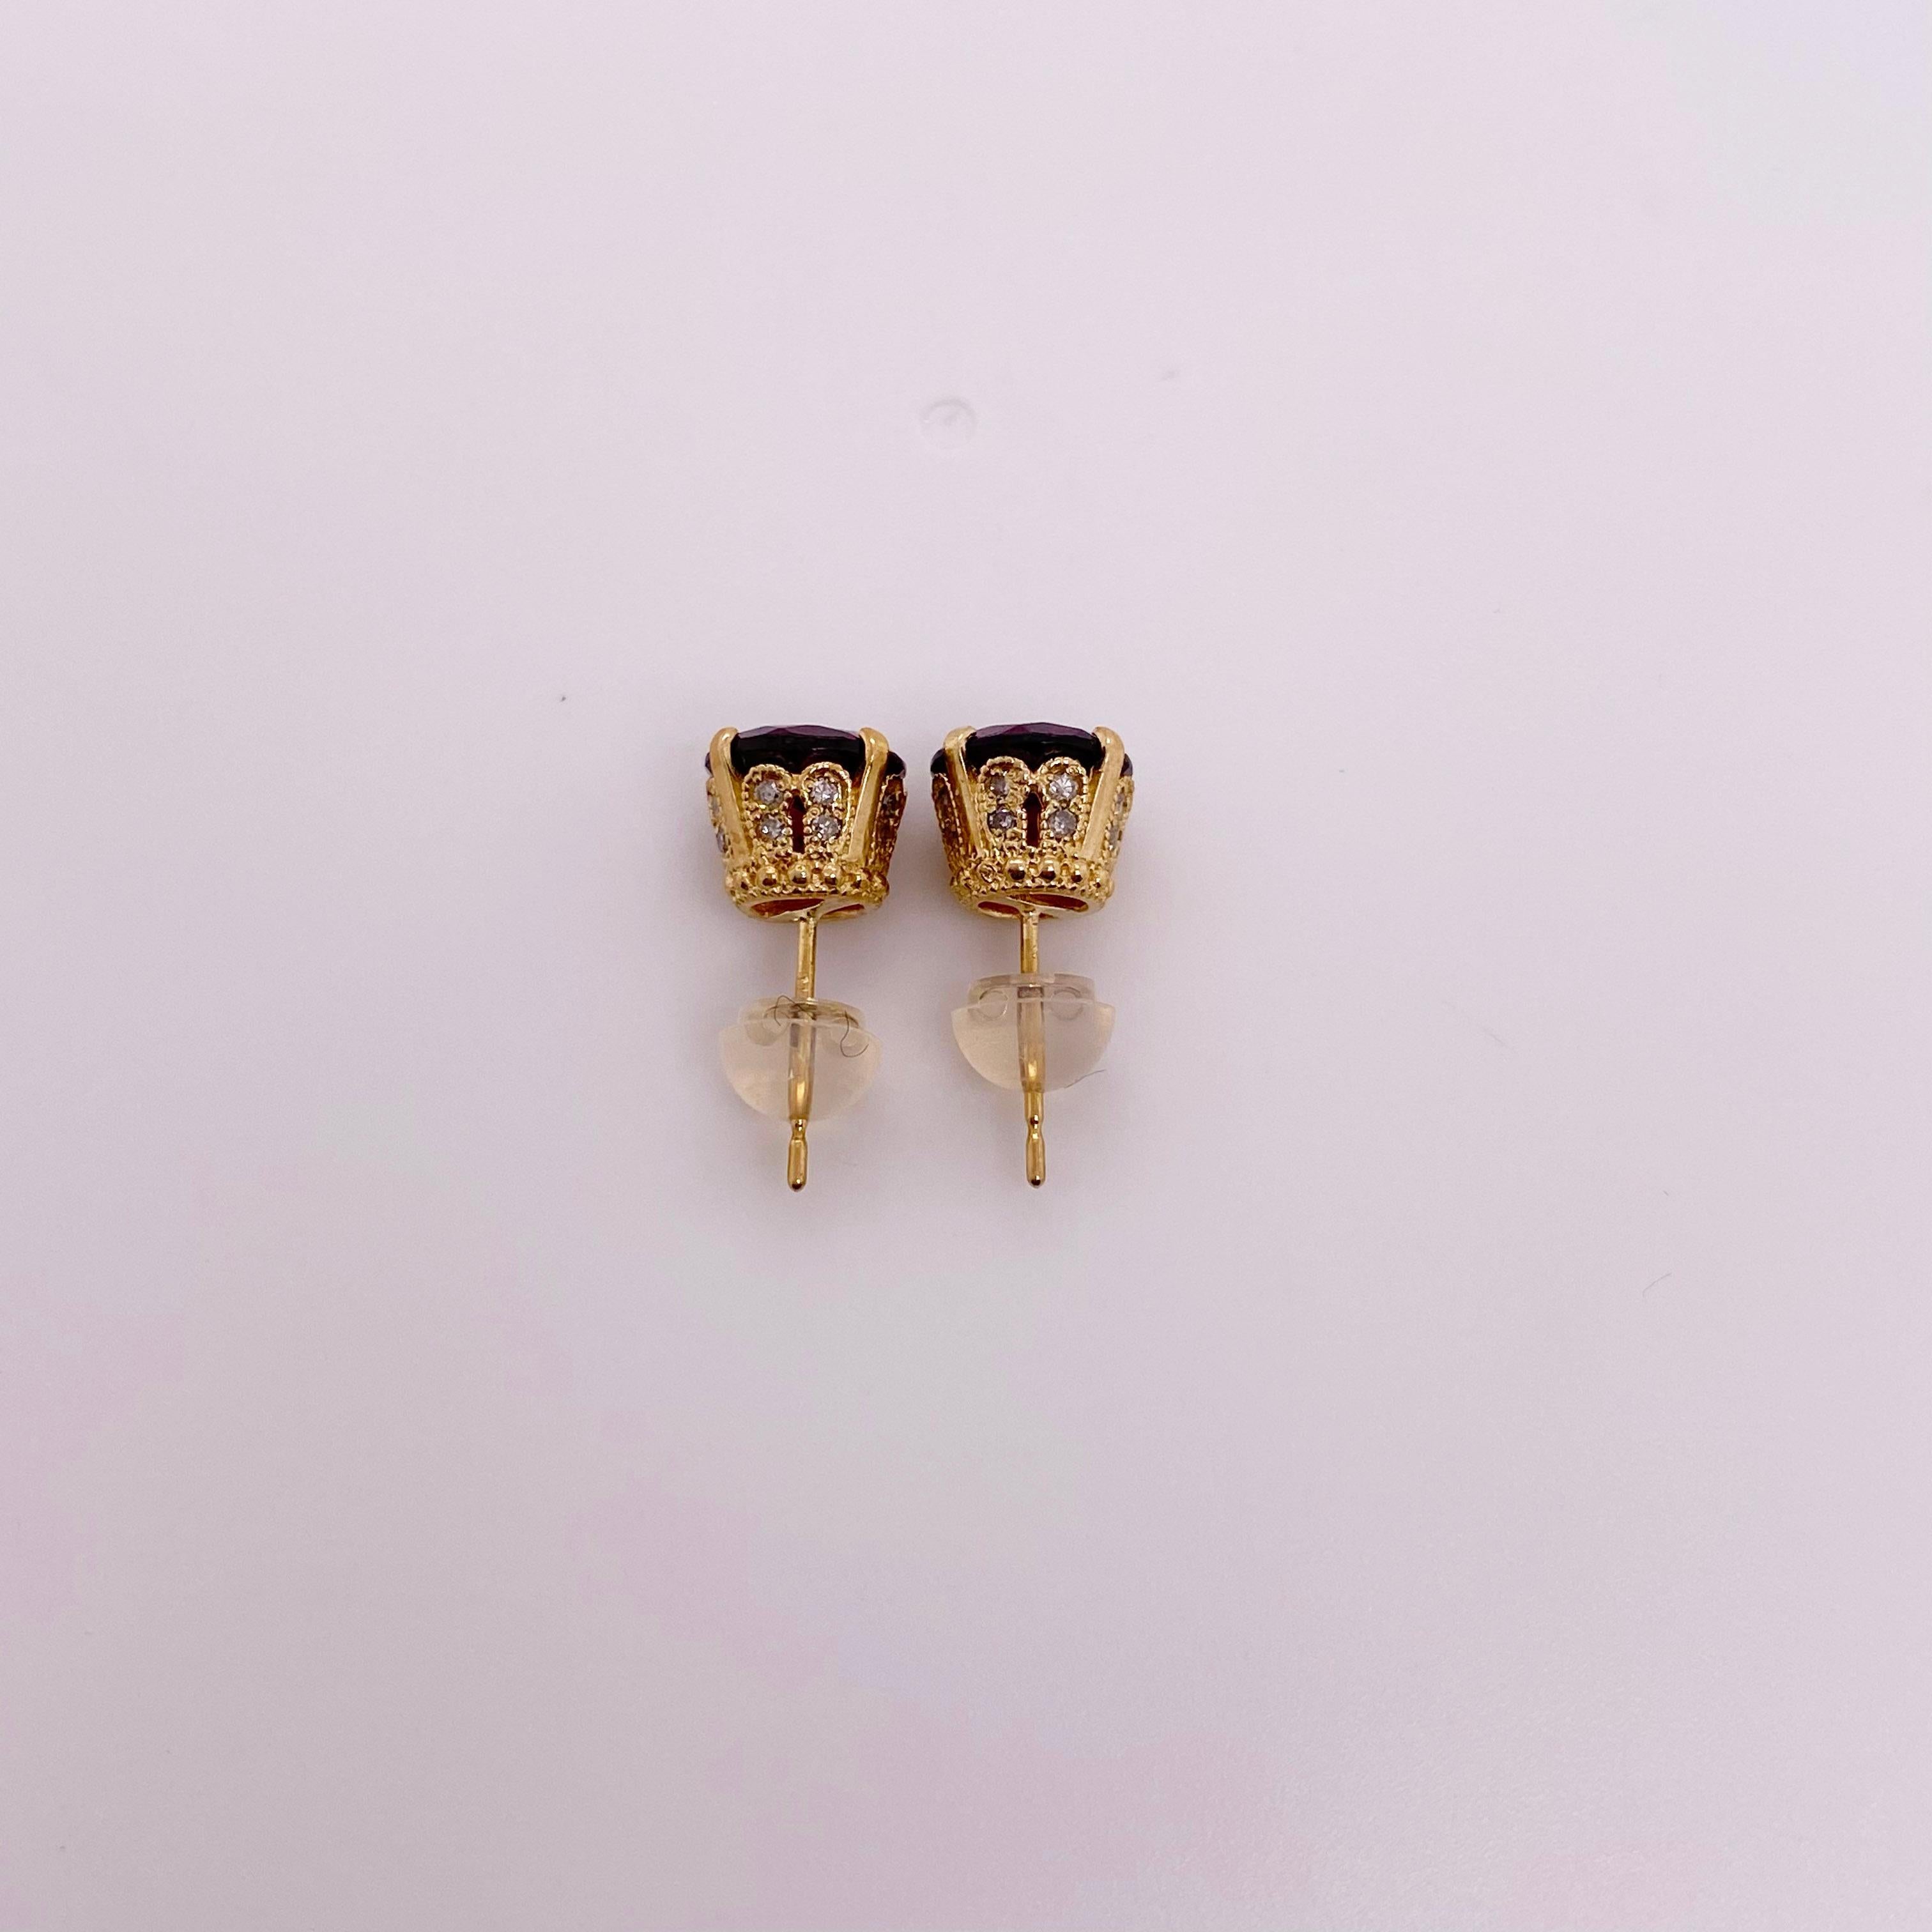 Round Cut Garnet Stud Earrings Yellow Gold Posts, Four Prong Rhodalite Garnet Earrings